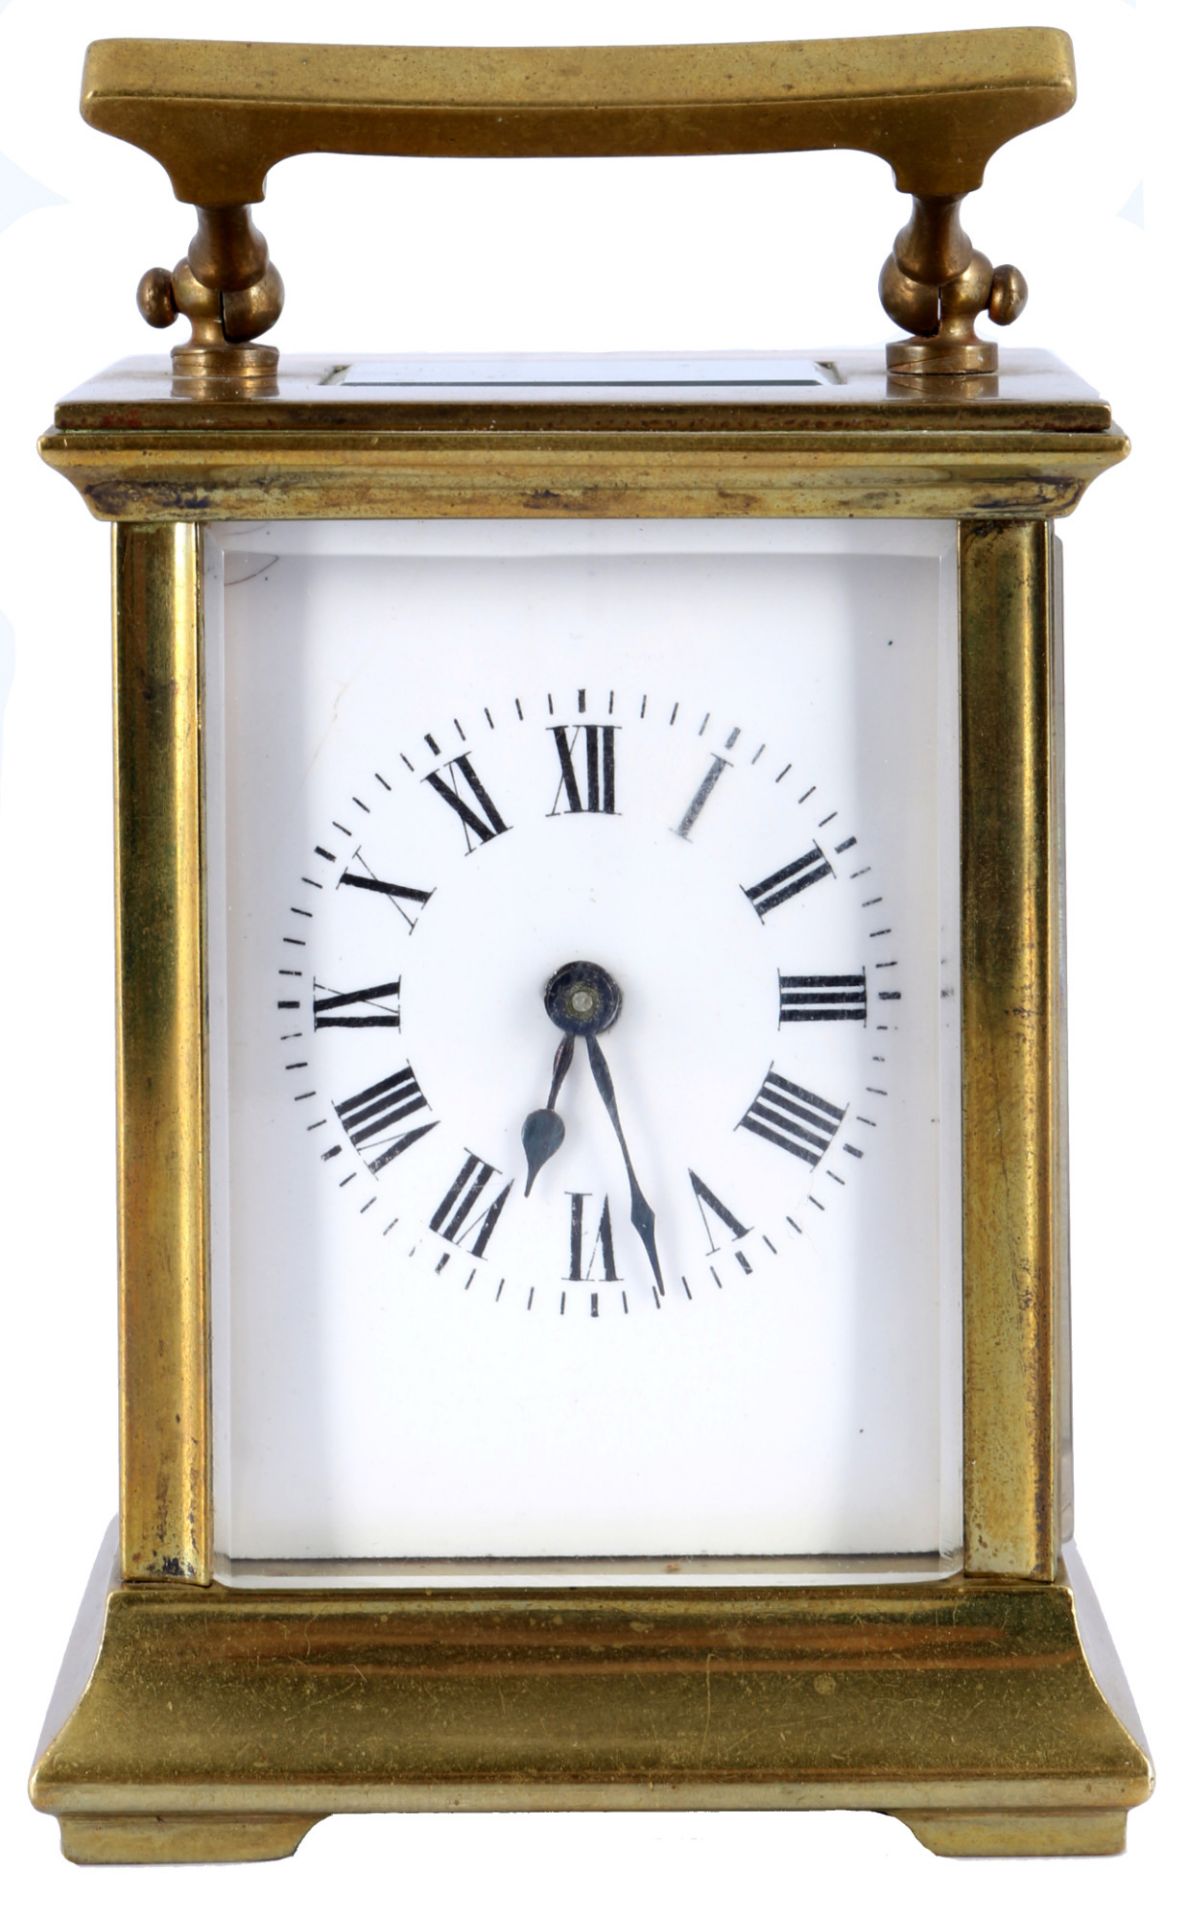 Reiseuhr, Frankreich um 1900, carriage clock,